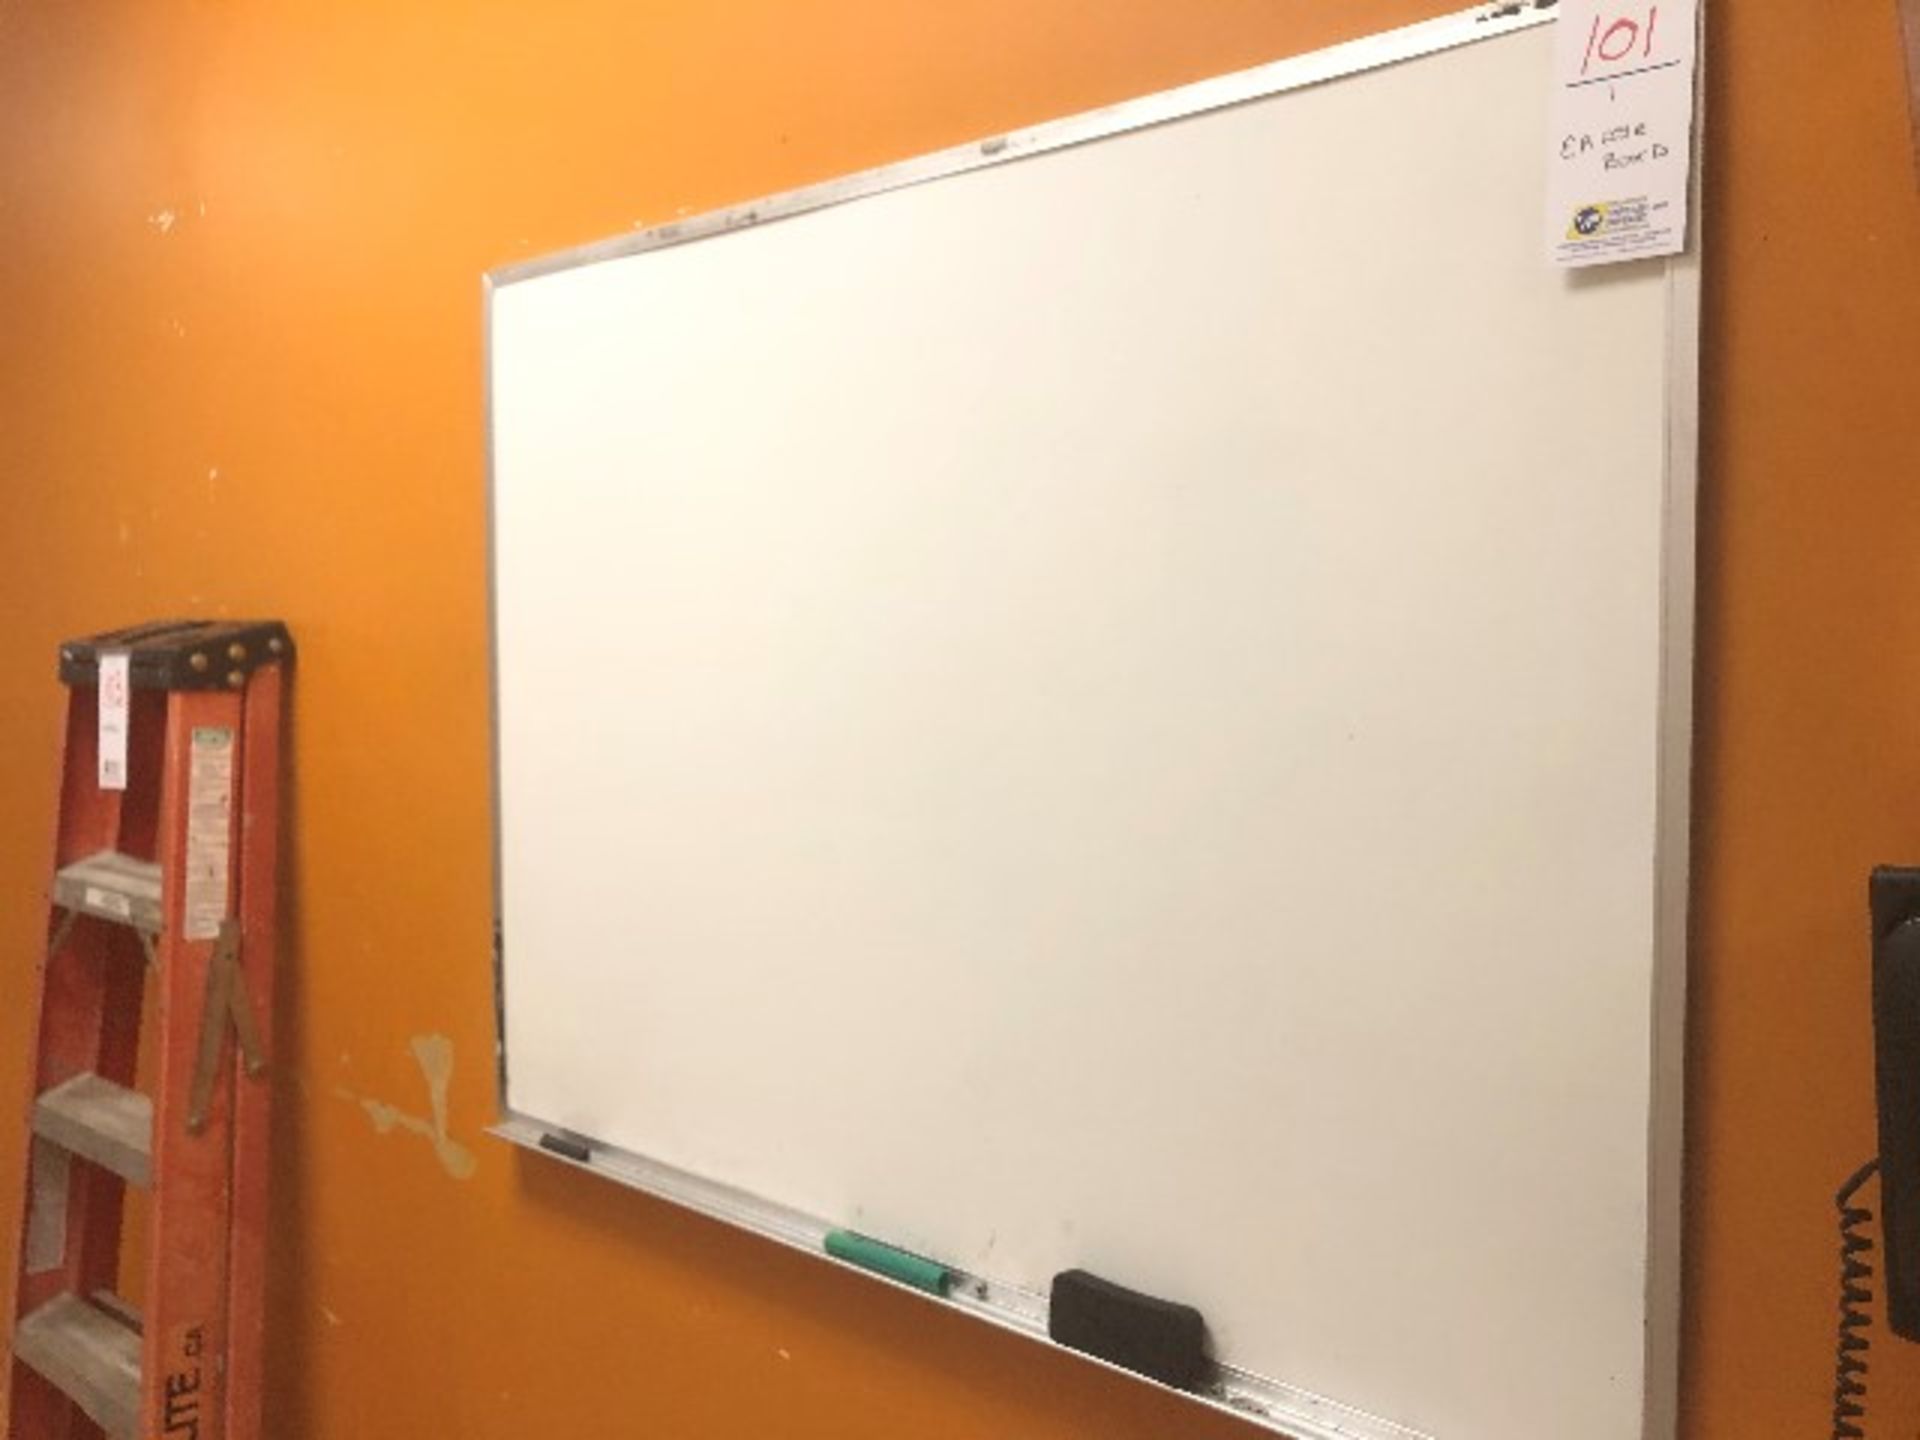 Erase board